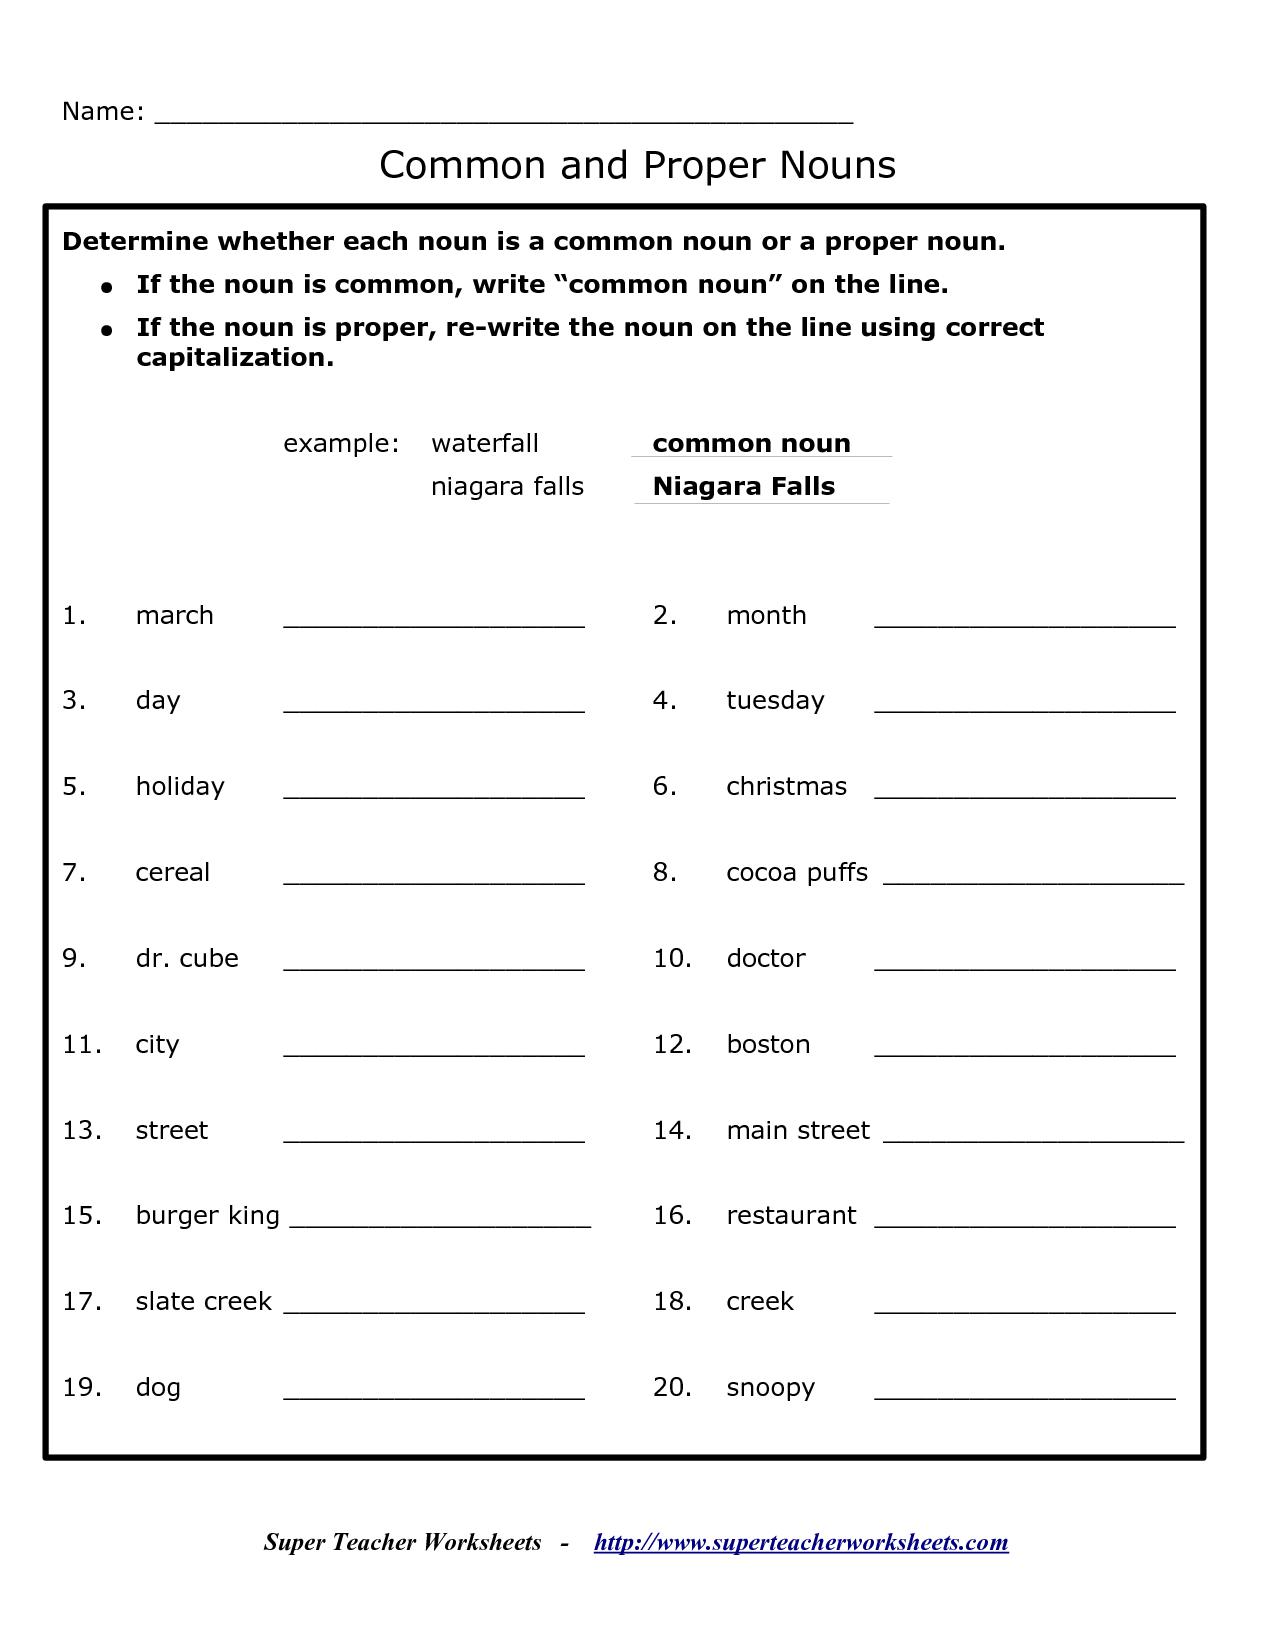 17 Best Images Of Proper Common Nouns Worksheet 32nd Grade Common And Proper Nouns Worksheets